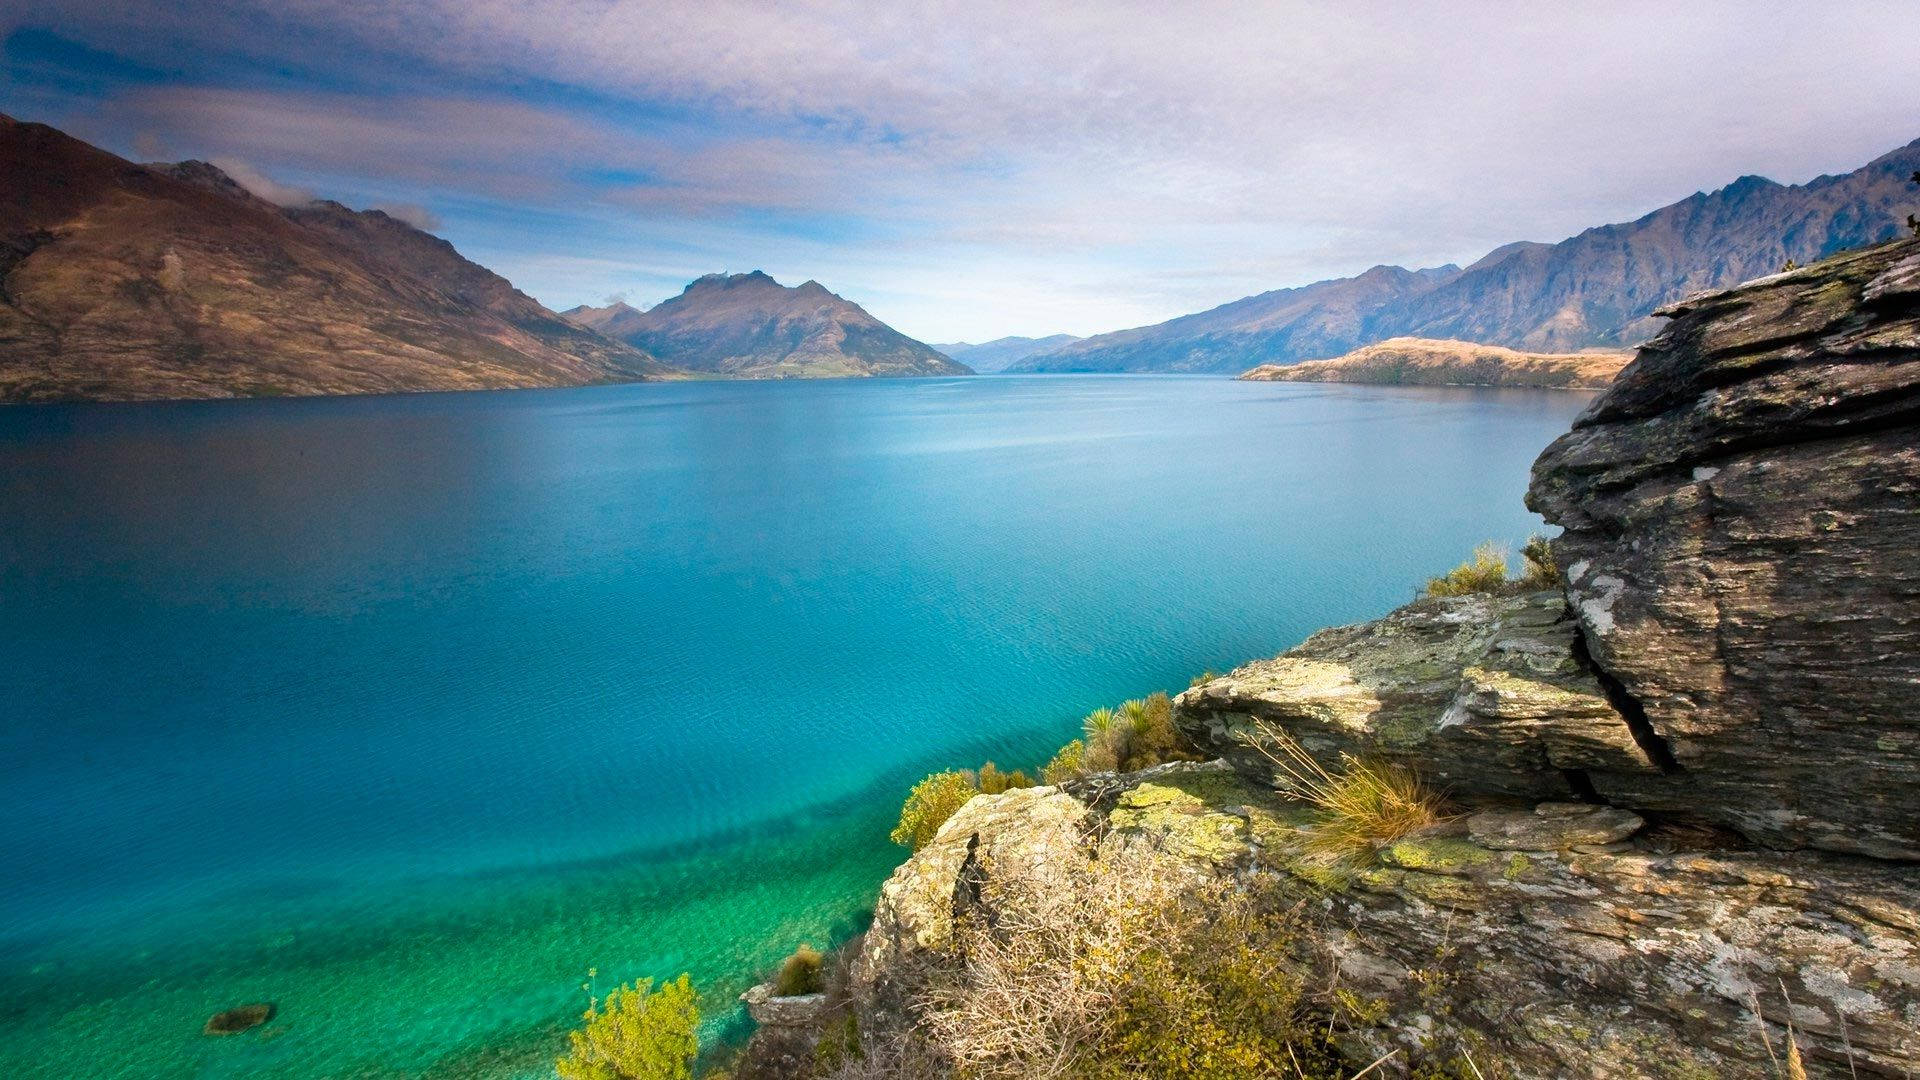 Lake Wakatipu New Zealand Wallpaper